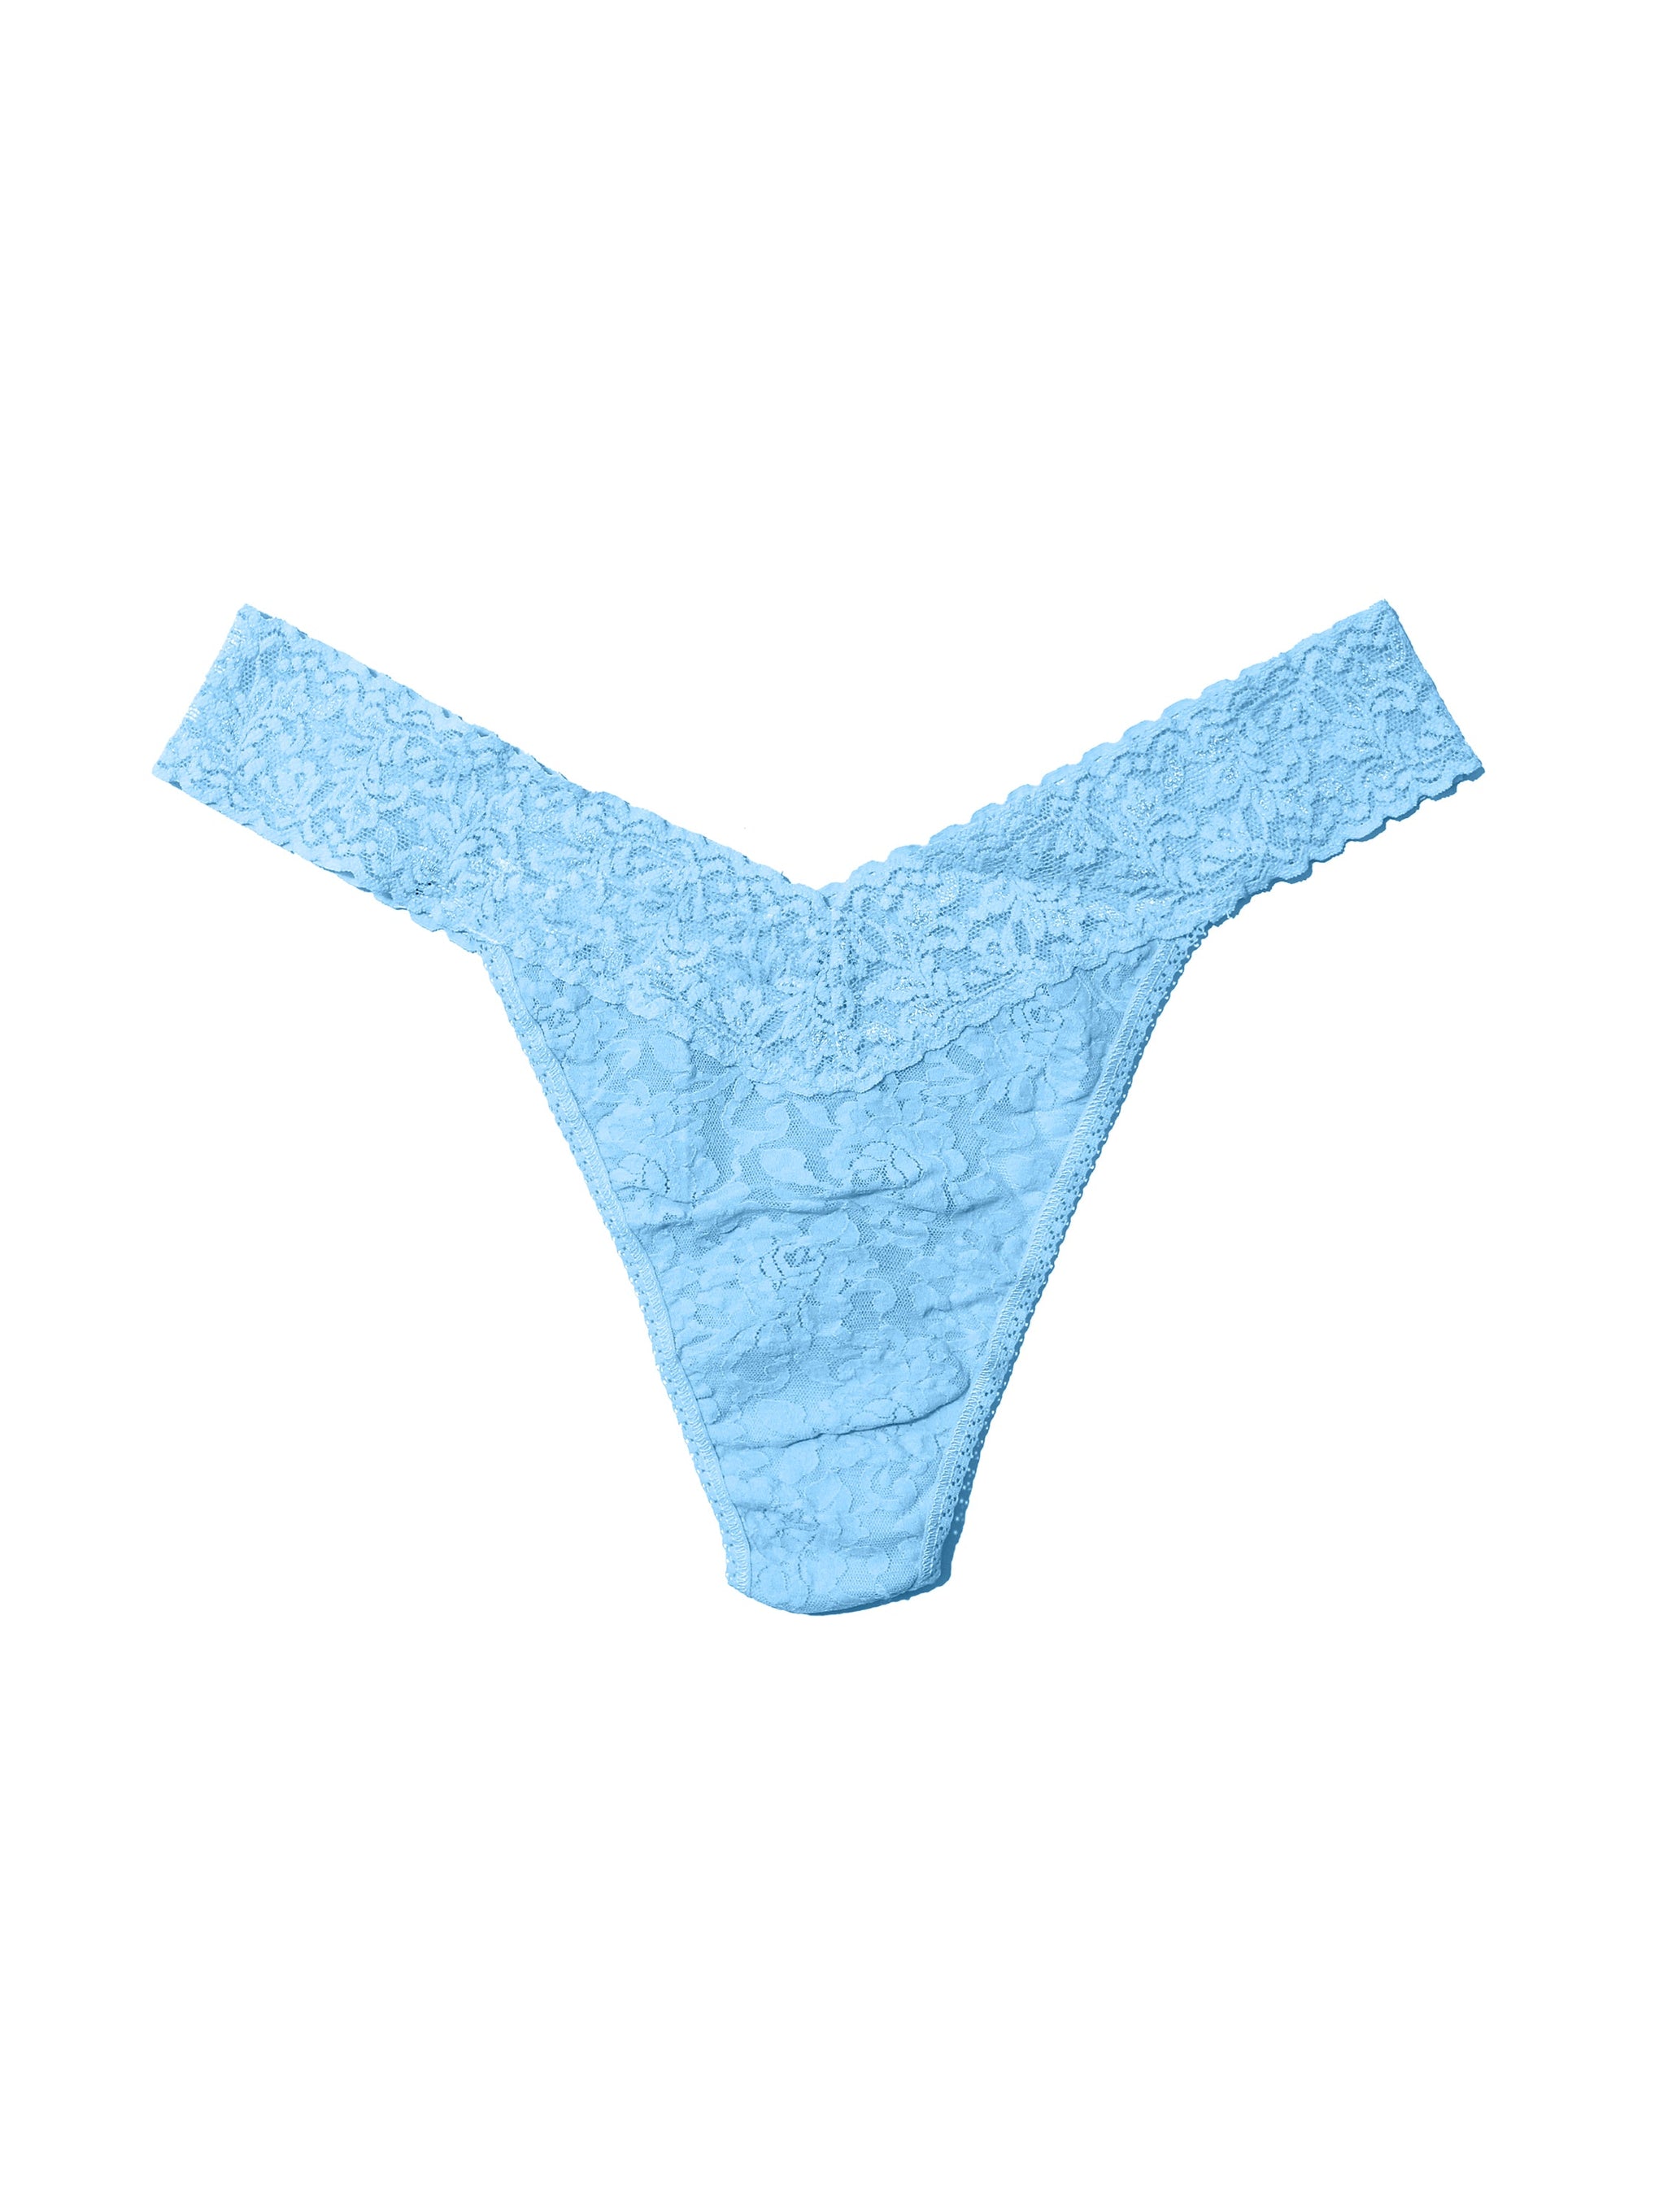 Wholesale korean bra sizes For Supportive Underwear 